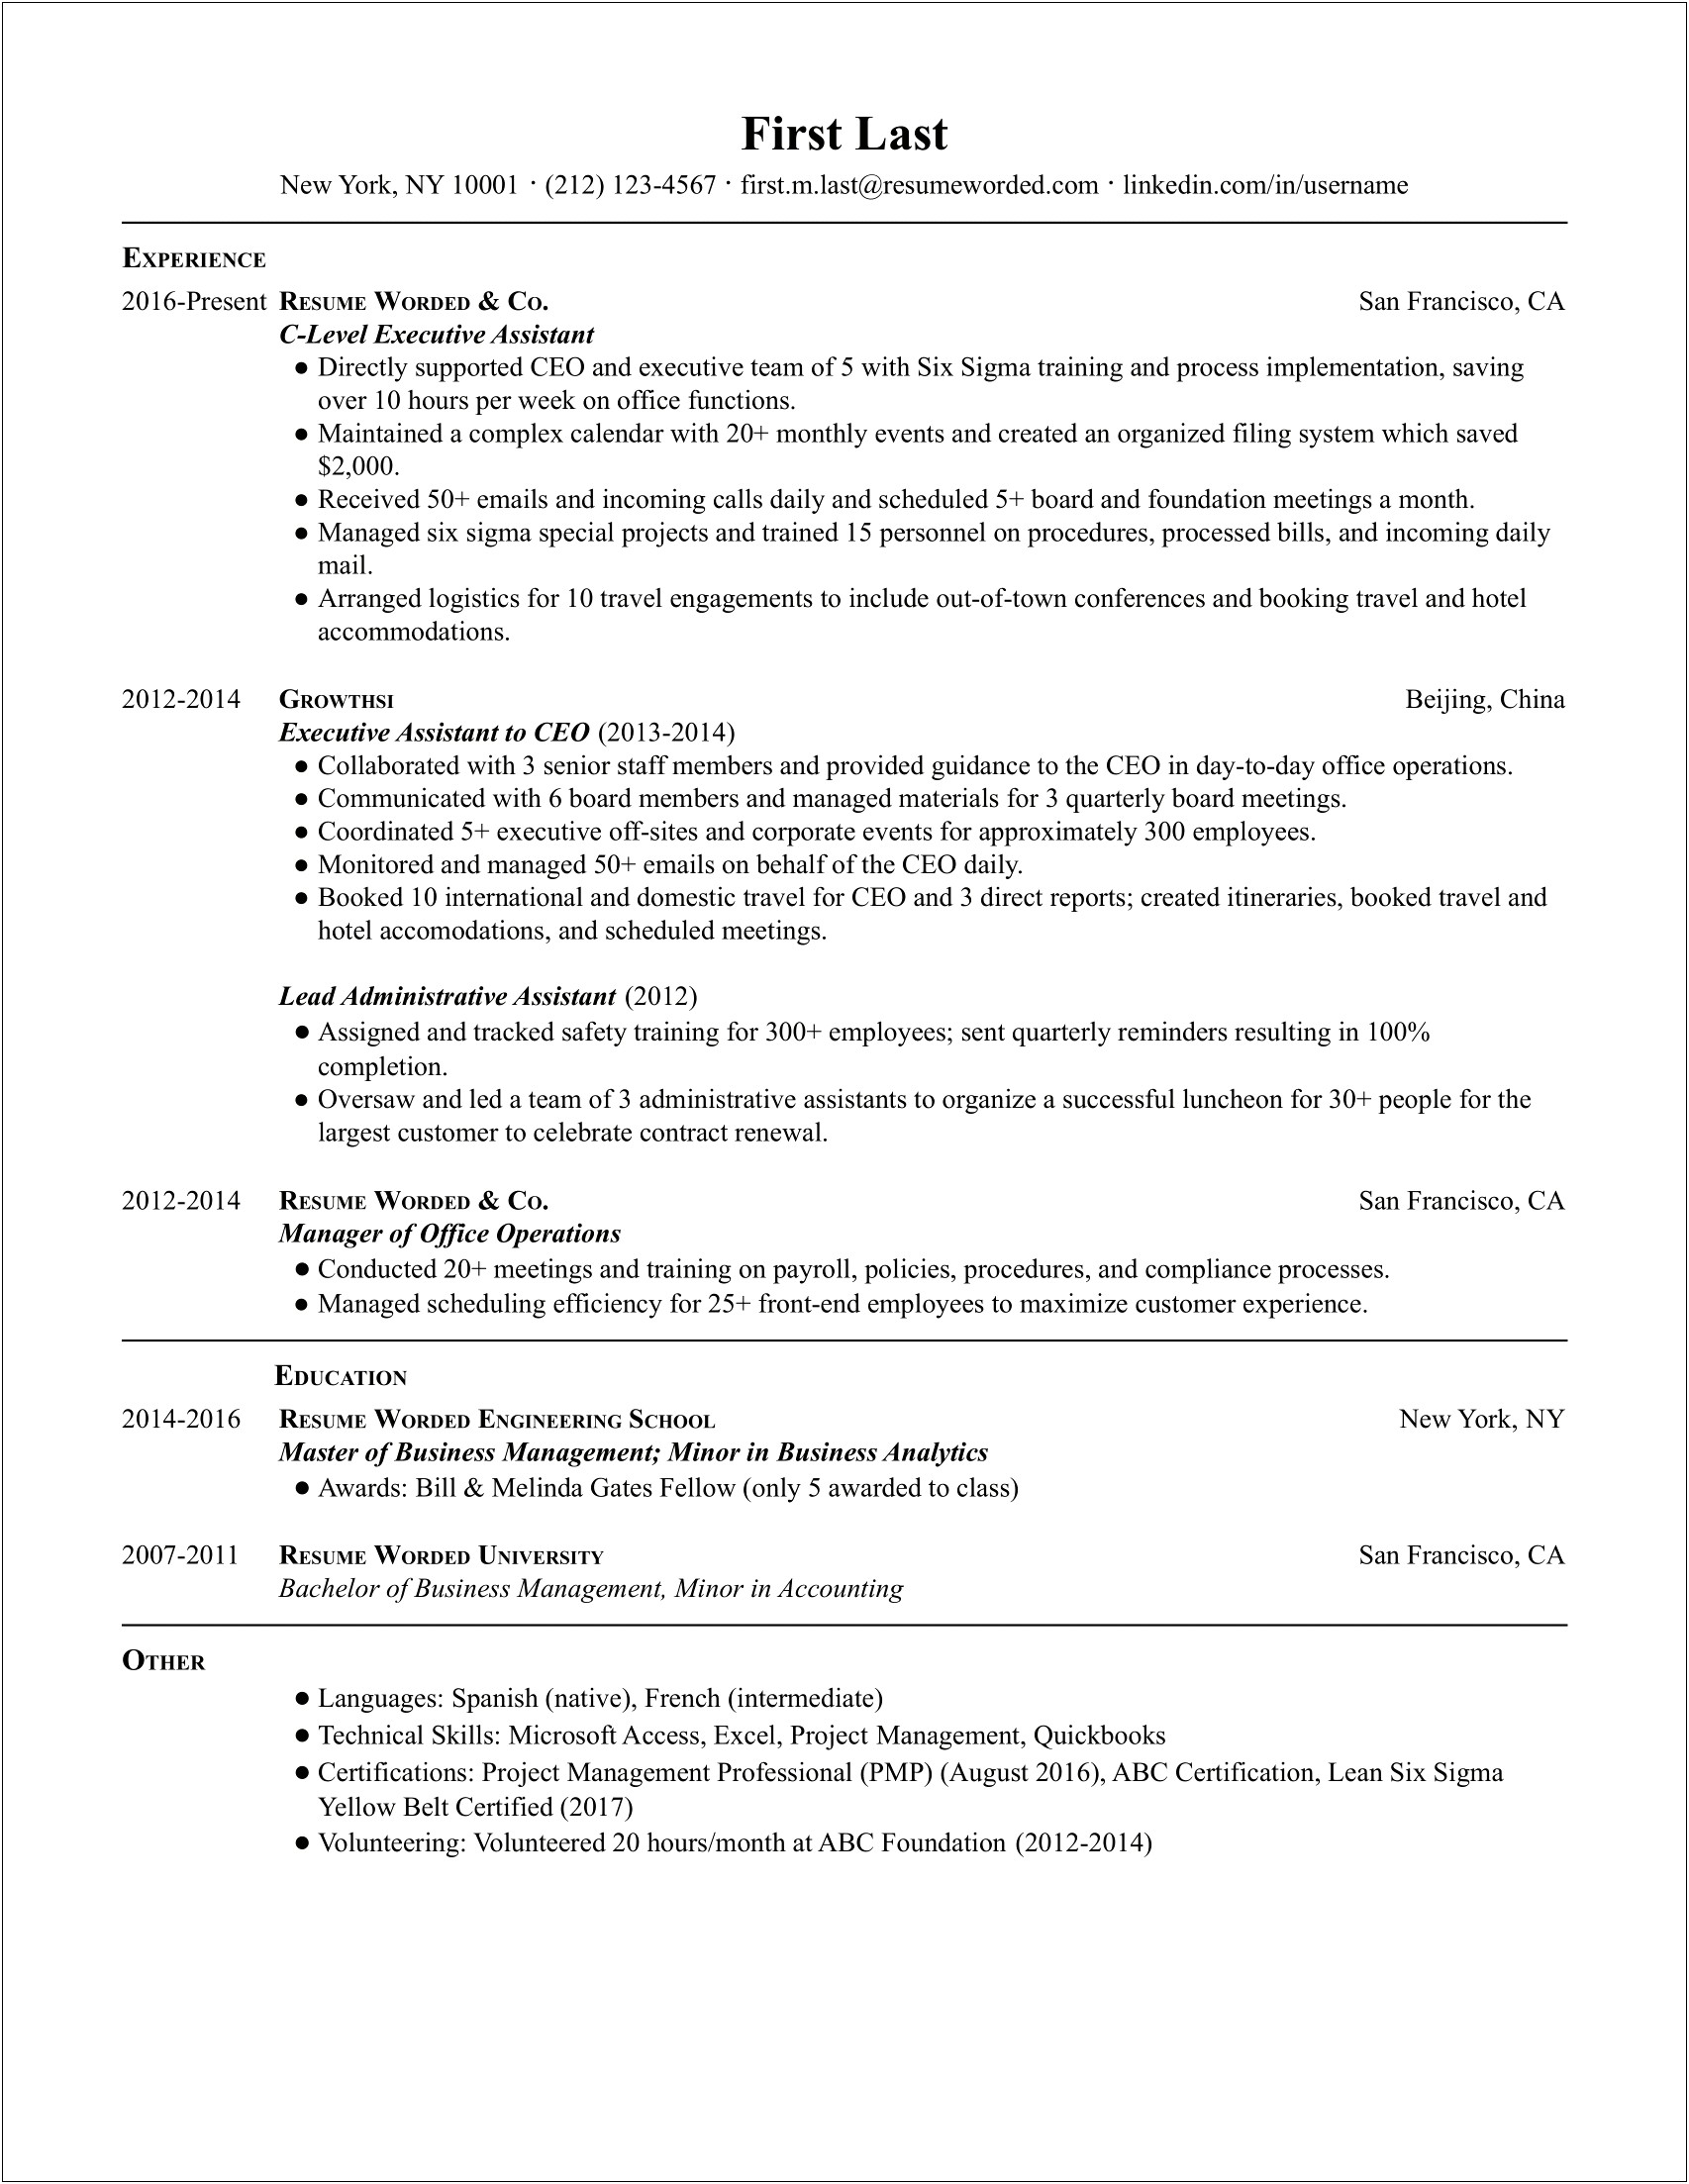 Senior Executive Assistant Job Description Resume